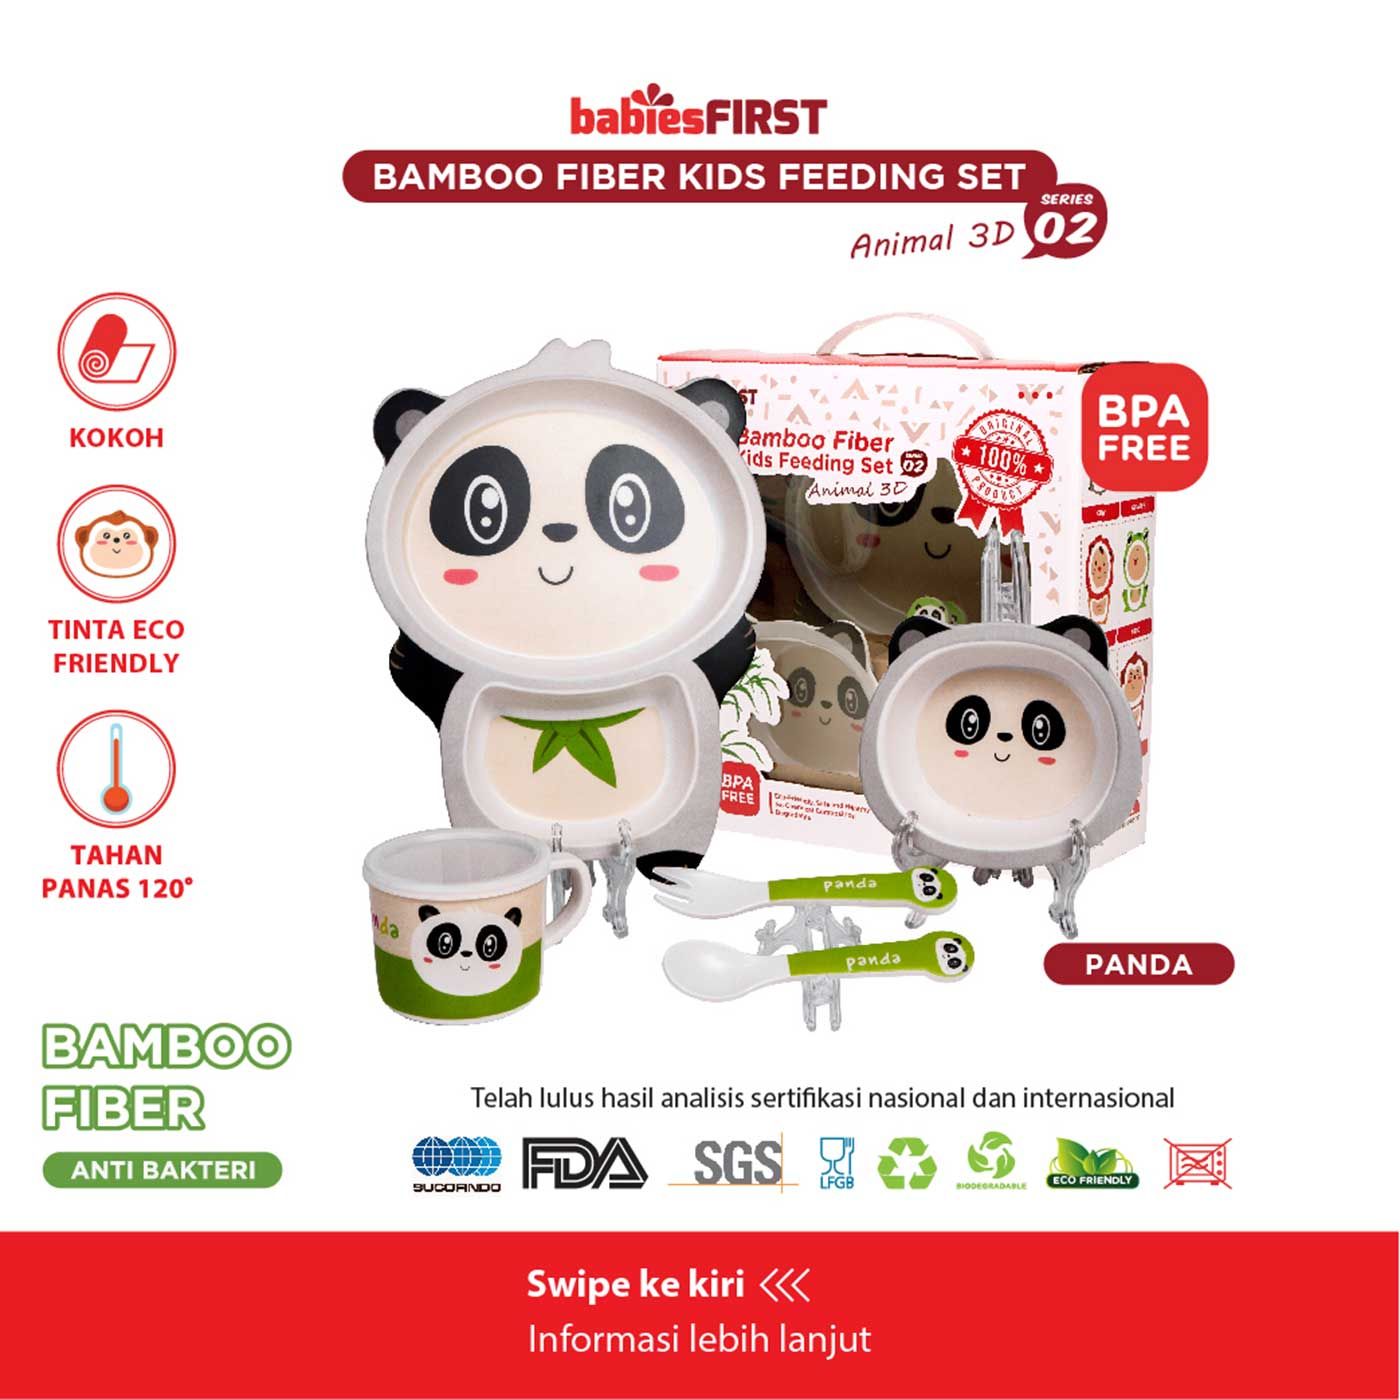 Babiesfirst Bamboo Fiber Kids Feeding Set Animal 3D Panda - 1